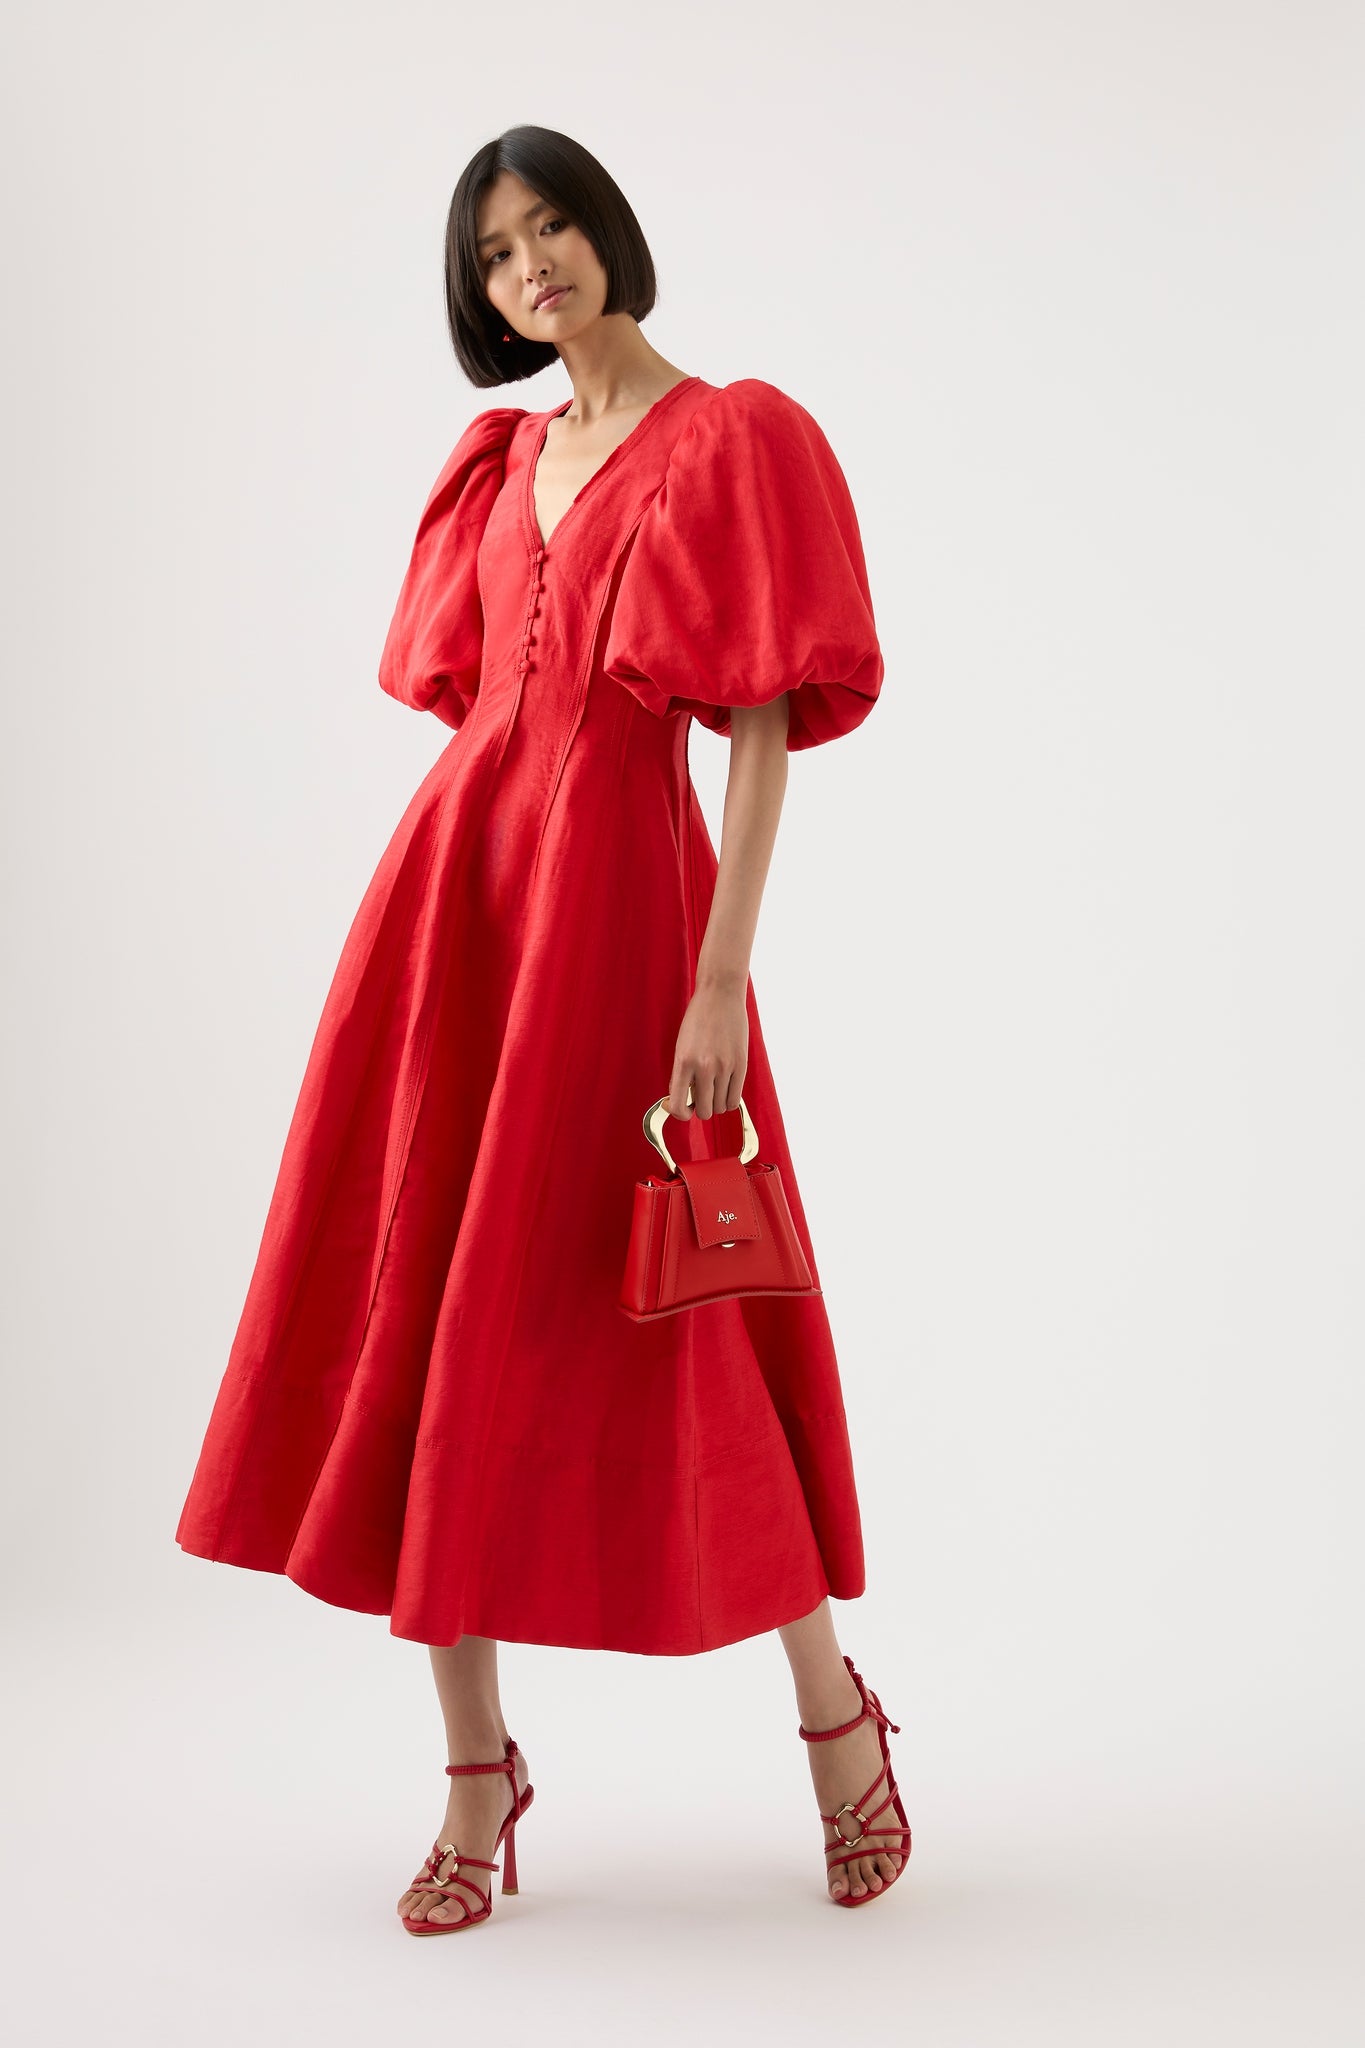 The Red Sweetheart Neck Cap Sleeve Midi Dress - Red Sweetheart Neckline A  Line Cap Sleeve Dress - Red - Dresses | RIHOAS